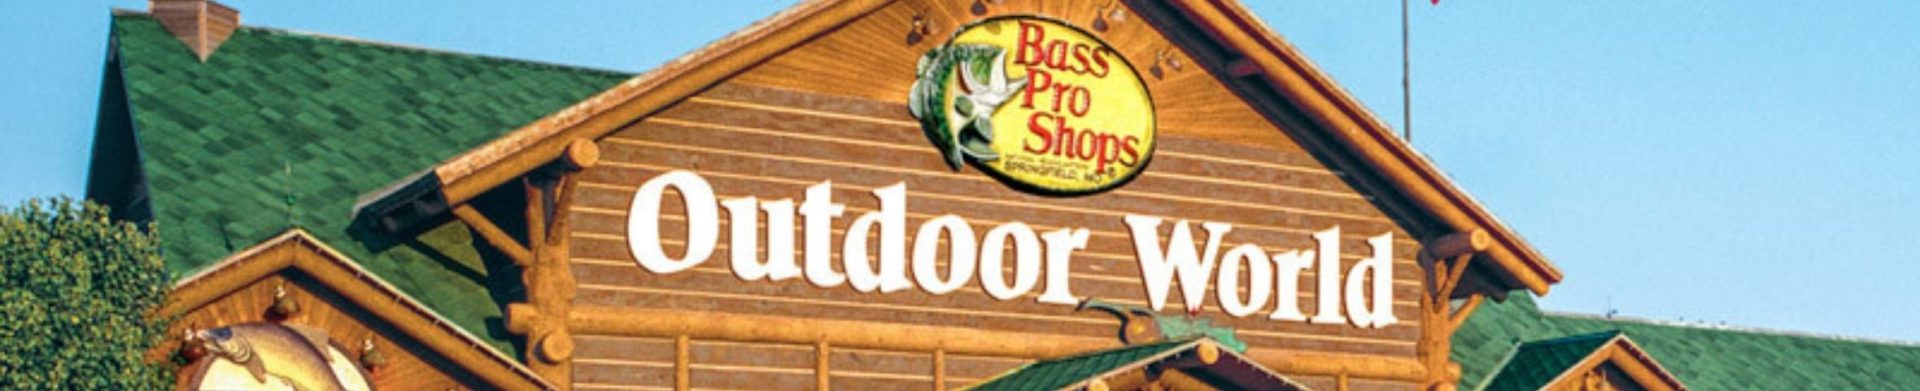 Bass Pro Shops storefront